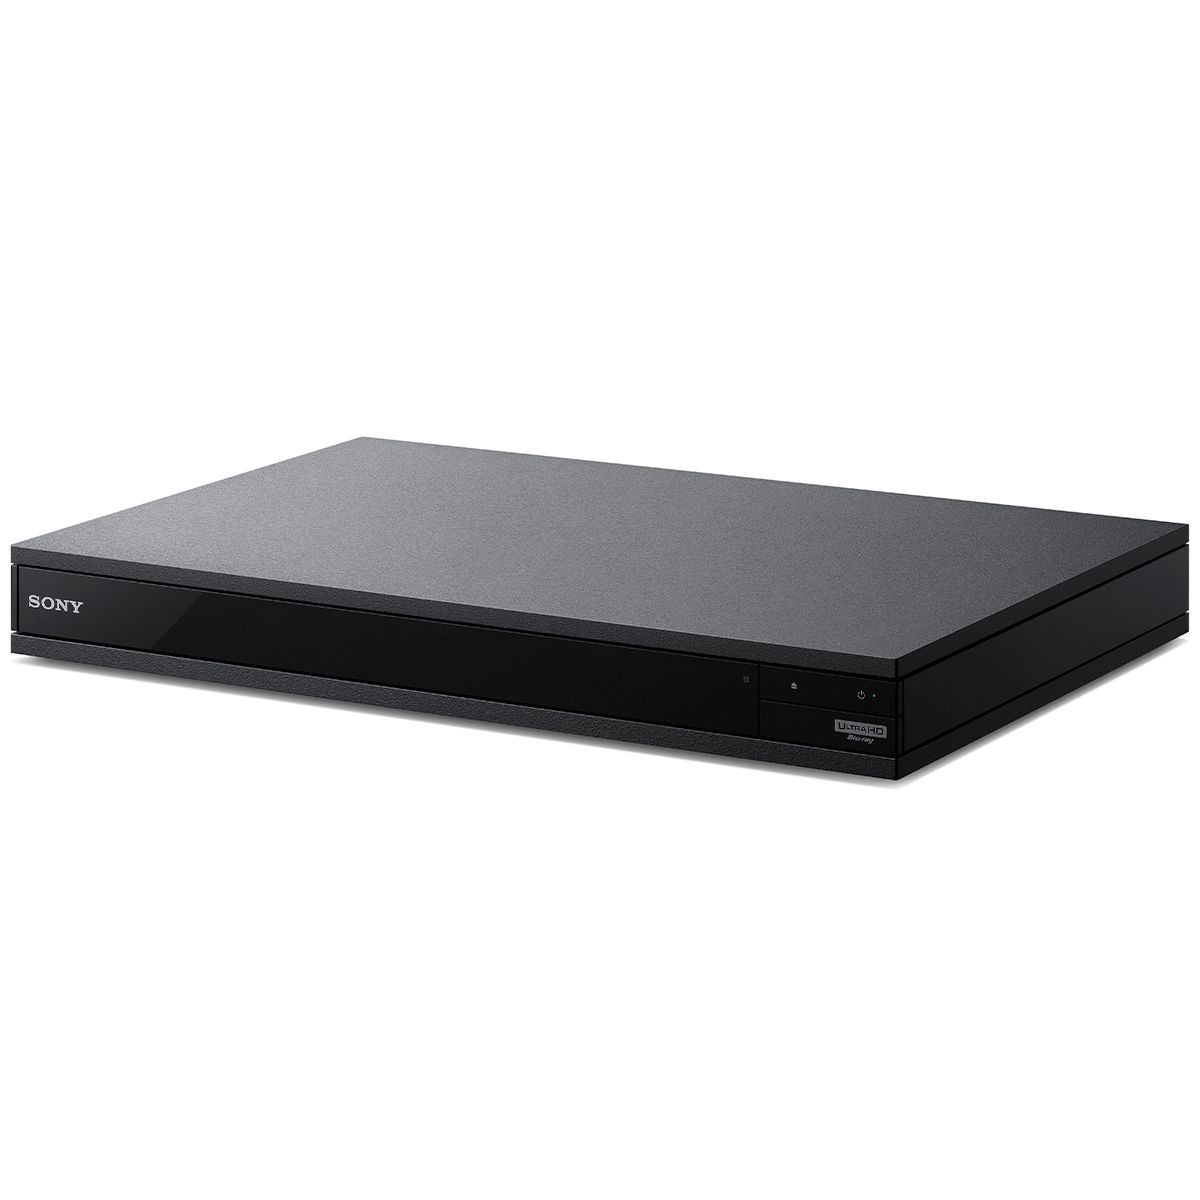 SONY UBP-X800M2B Black / Reproductor Blu-Ray 3D 4K HDR